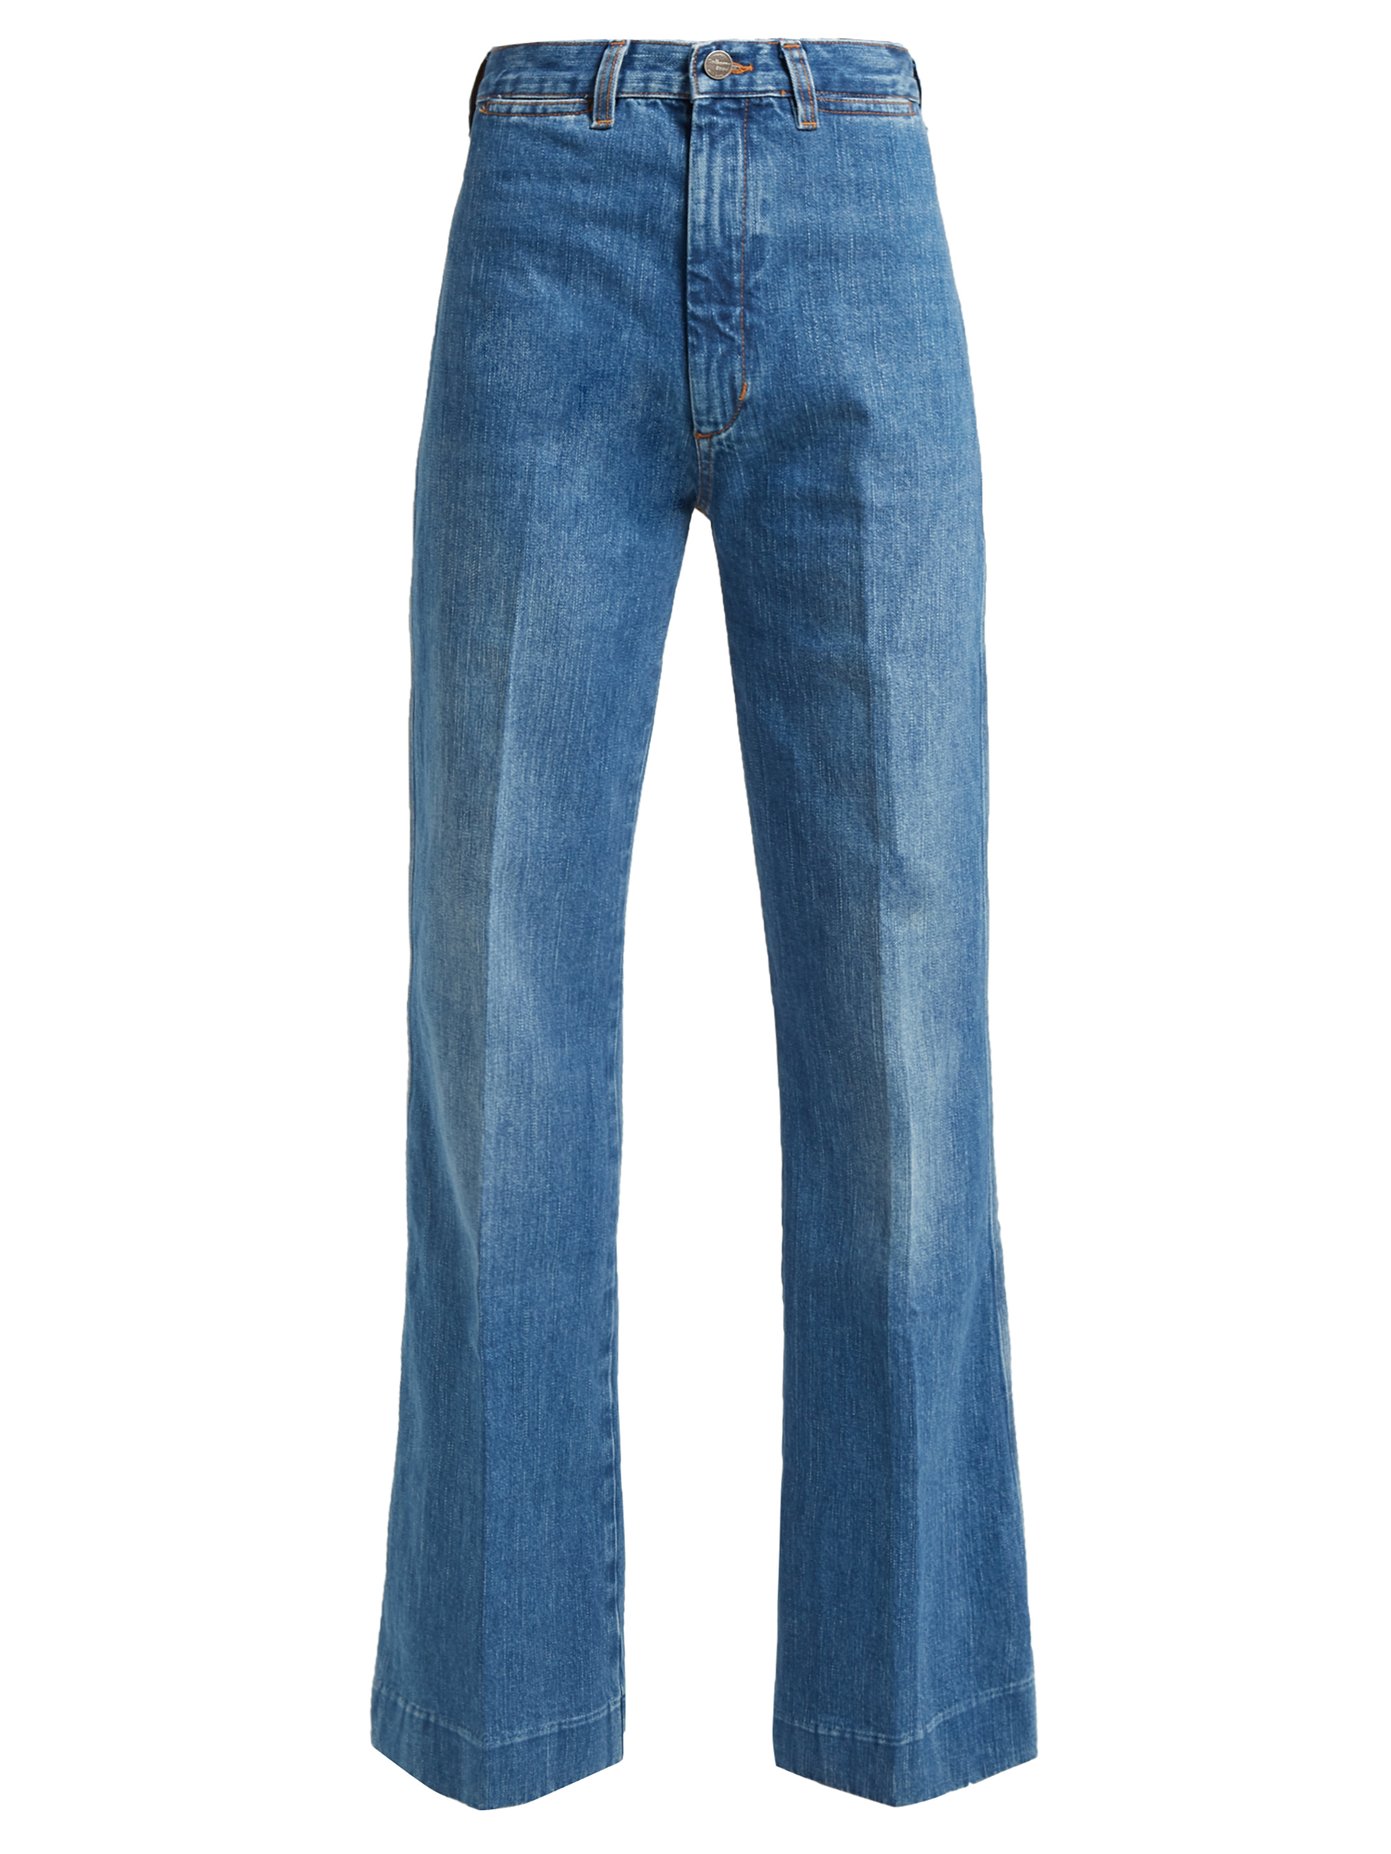 Bay wide-leg jeans | M.i.h Jeans 